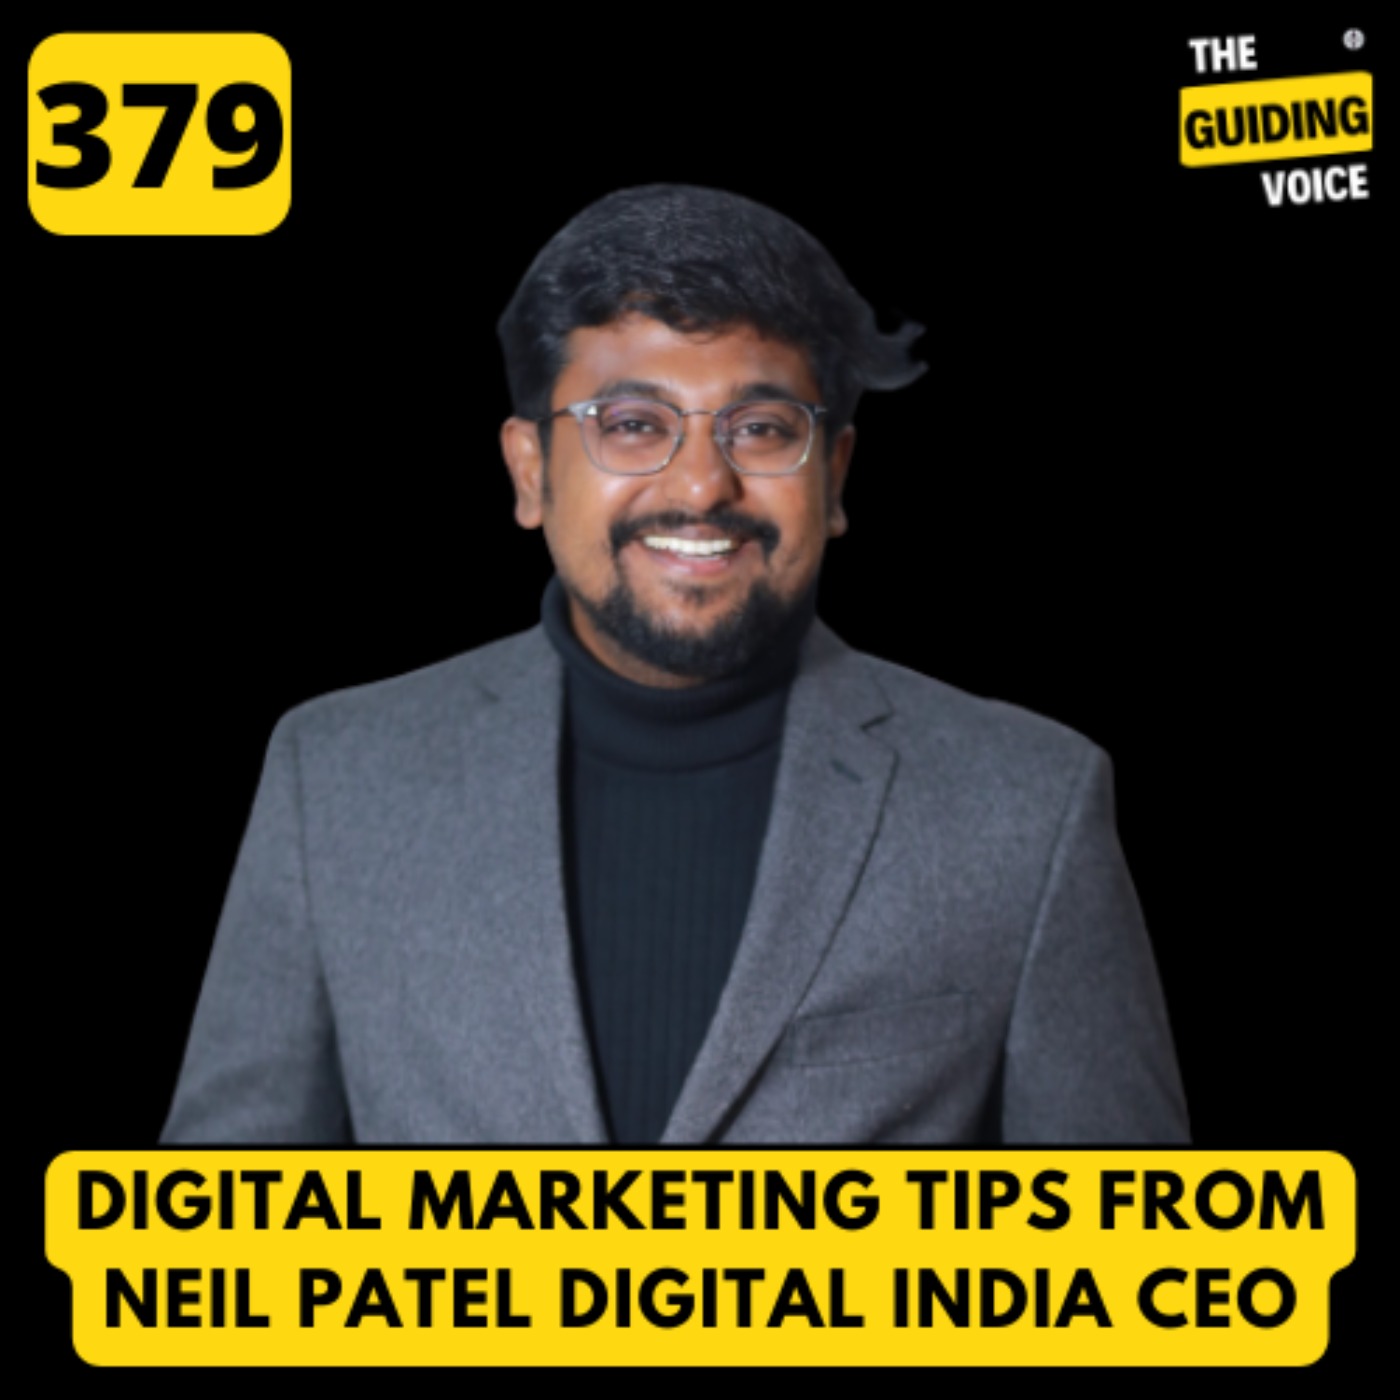 Future of Digital marketing and careers | Pradeep Kumar CEO, Neil Patel Digital India, CEO | #TGV379